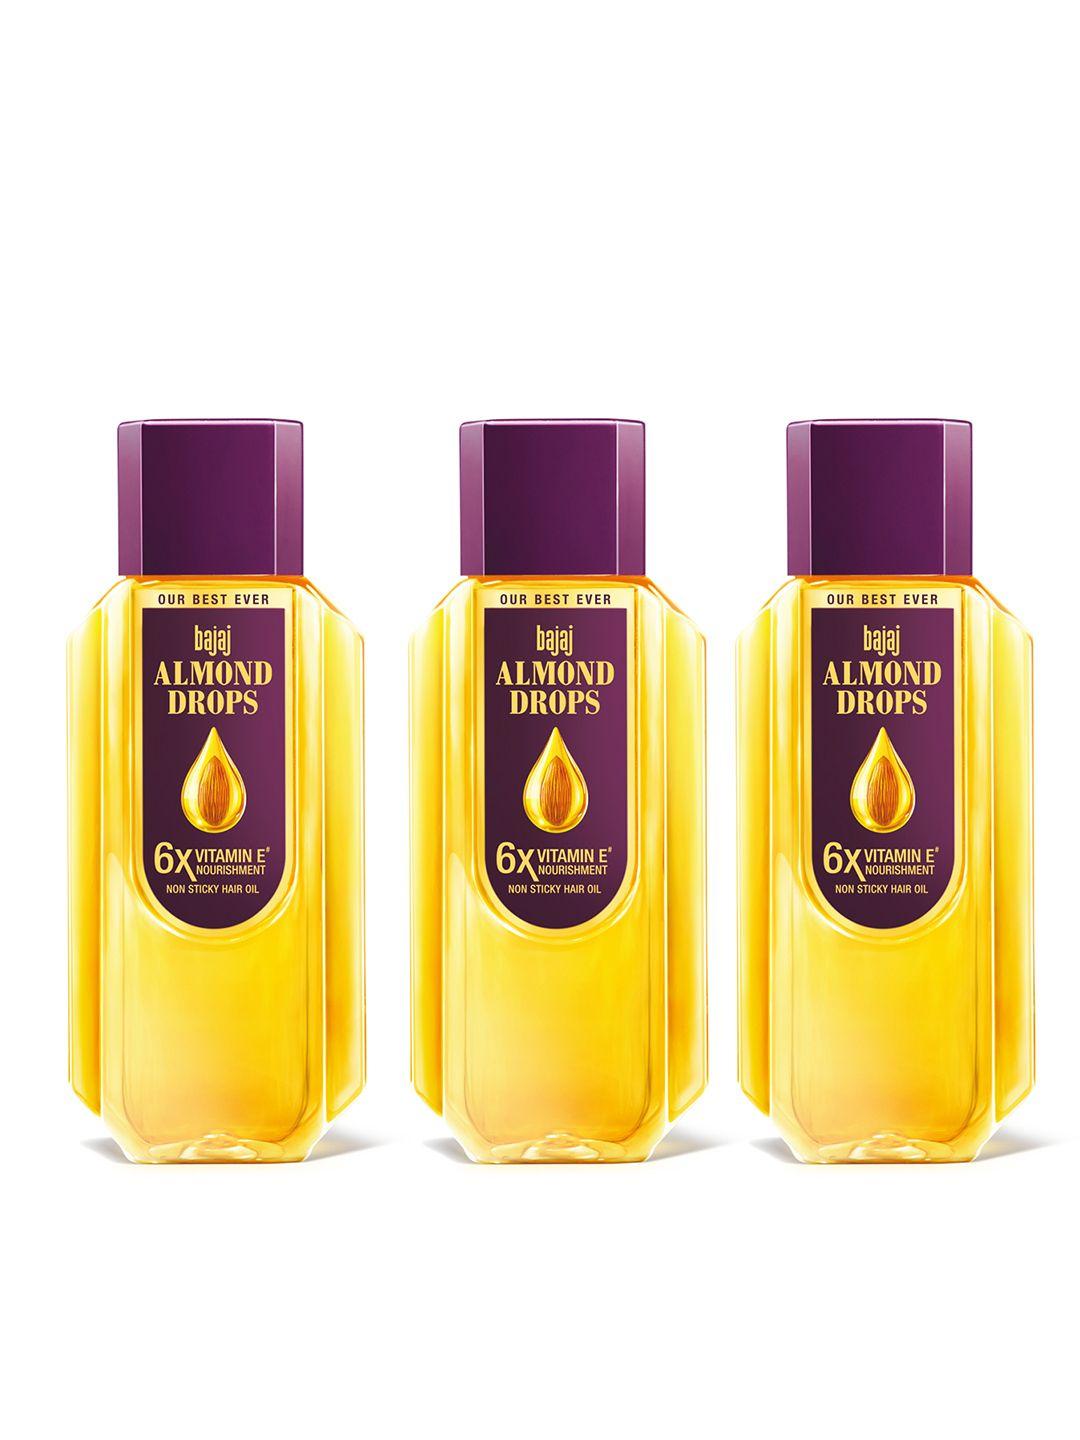 bajaj consumer care set of 3 almond drops 6x vitamin e non-sticky hair oil - 475ml each